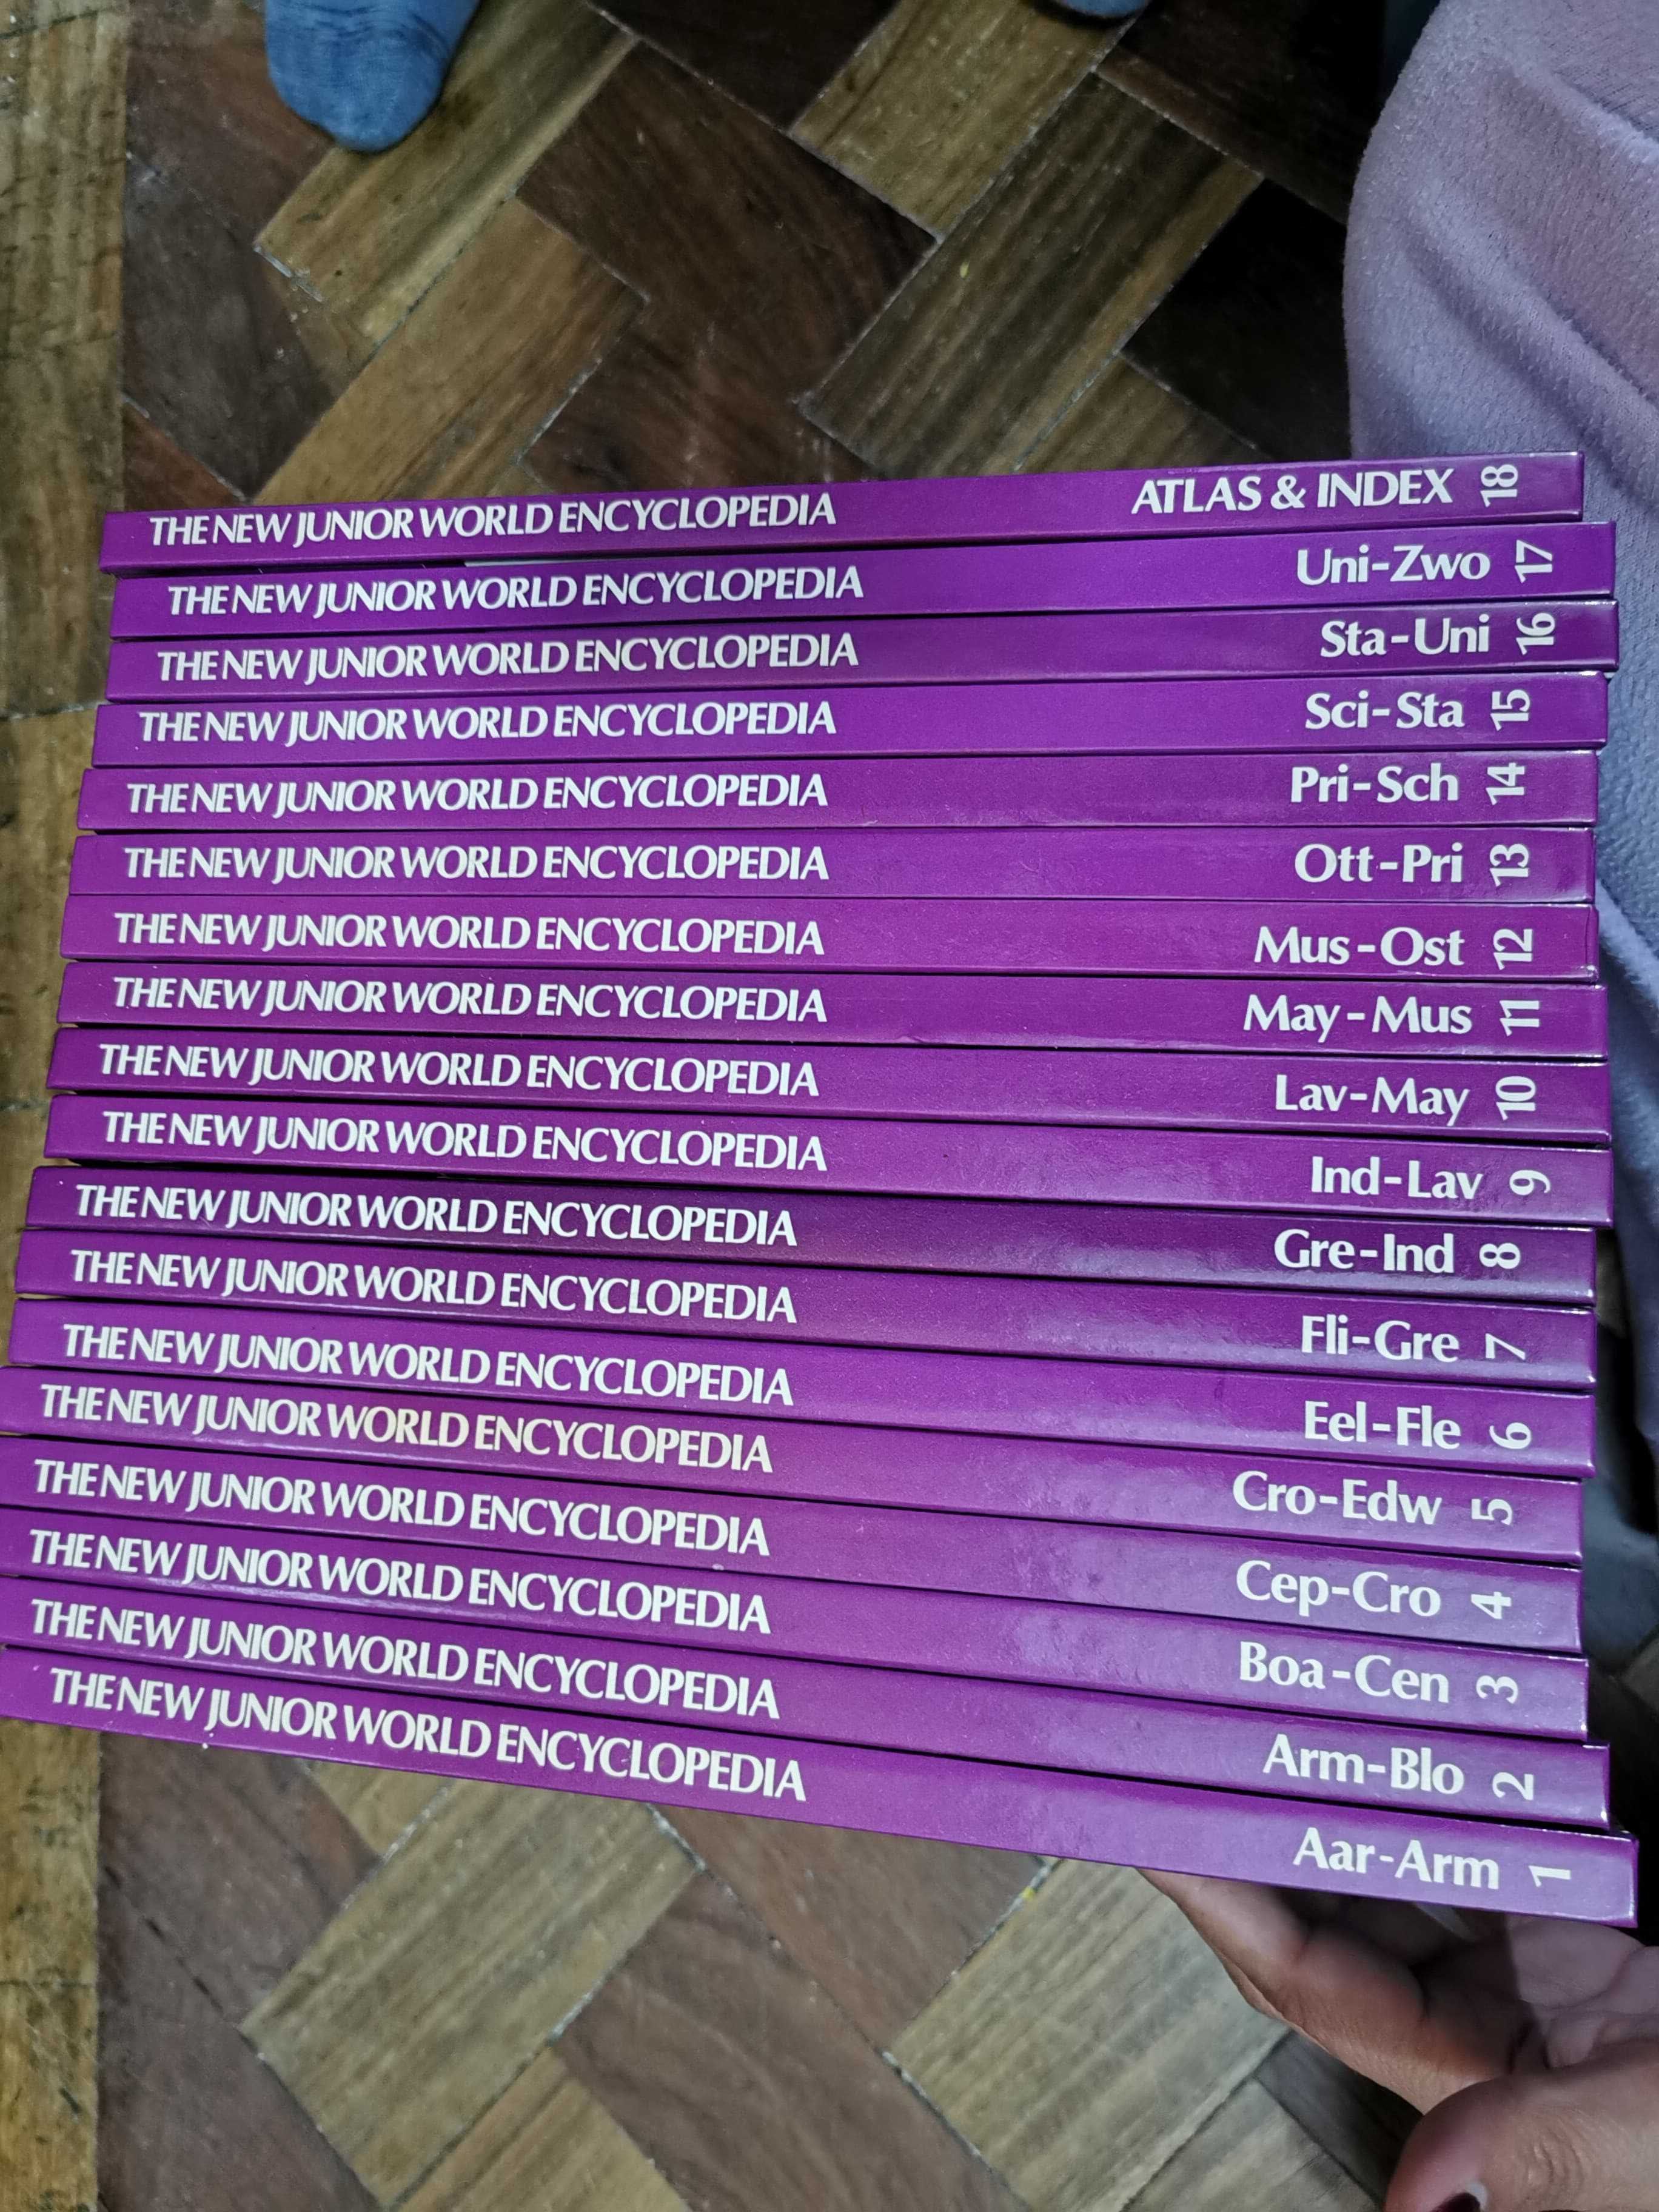 The new world junior encyclopedia (18 volumes)